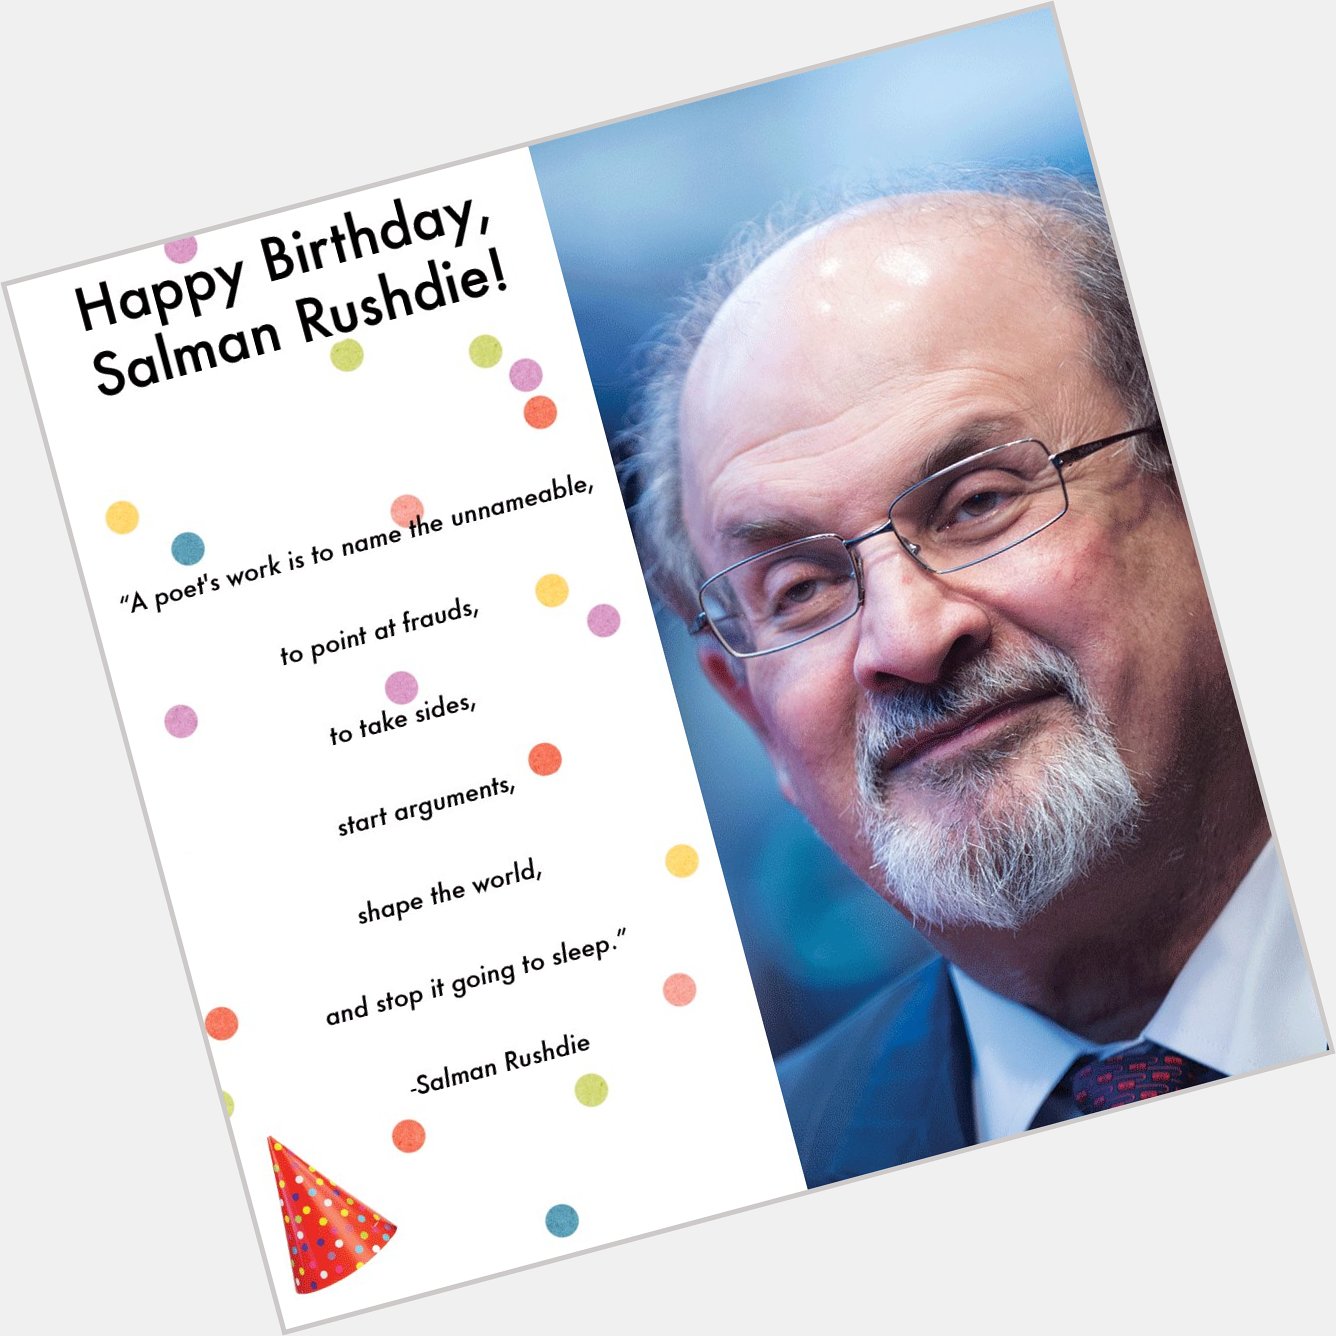 Happy Birthday Salman Rushdie! 